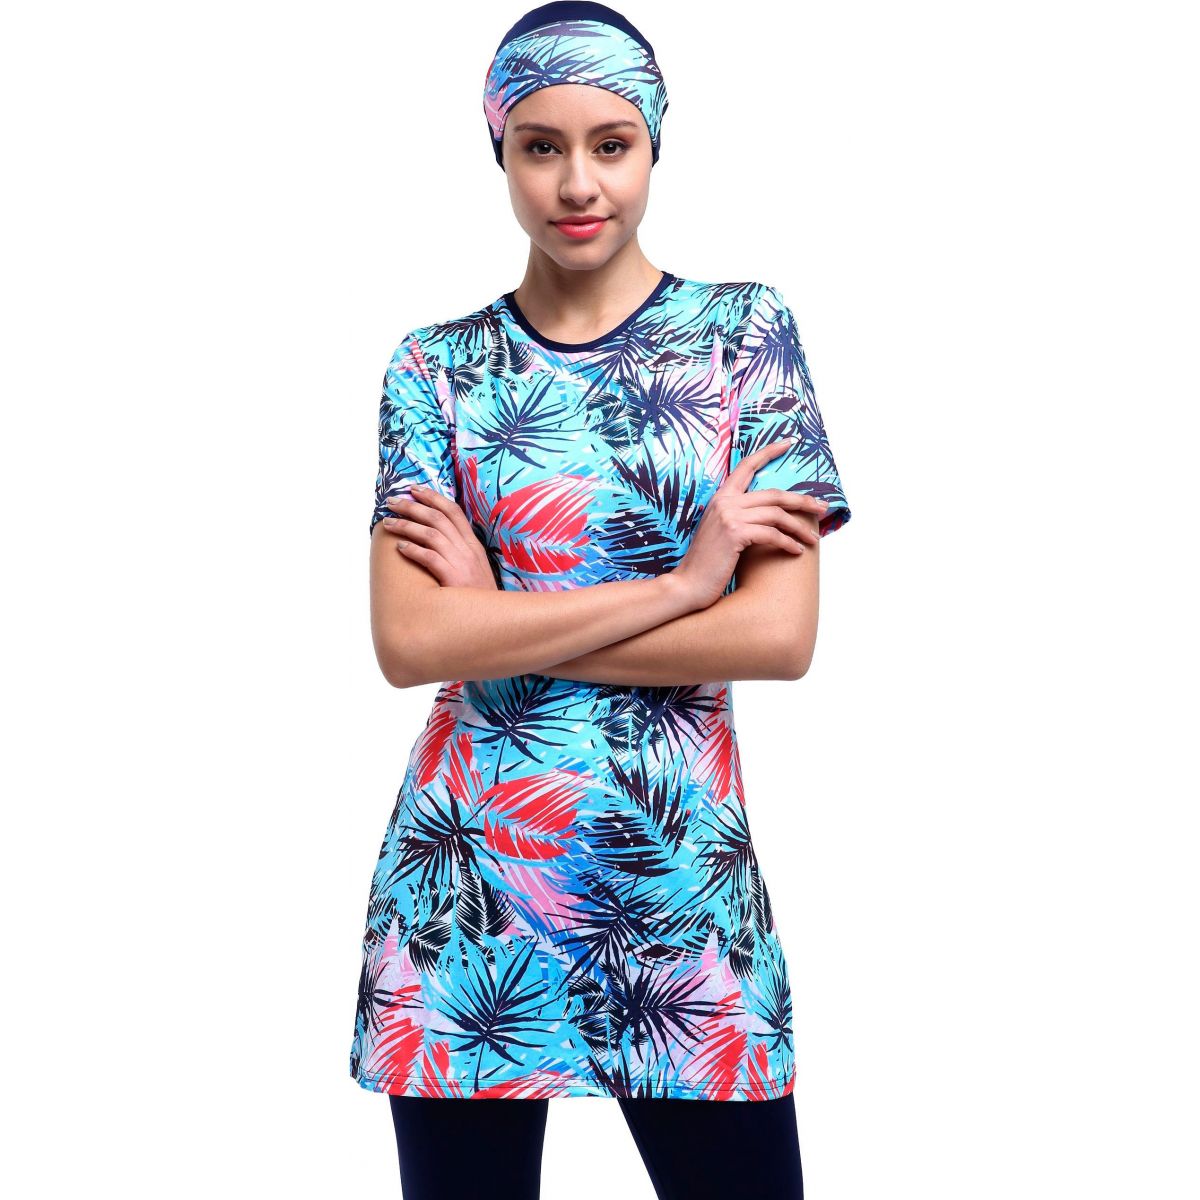 Argisa 7527 Half Sleeve Patterned Semi Hijab Swimwear 36-44 Muslim Hijab Islamic Swimsuit Burkini Turkey Half Cover With Swim Hat